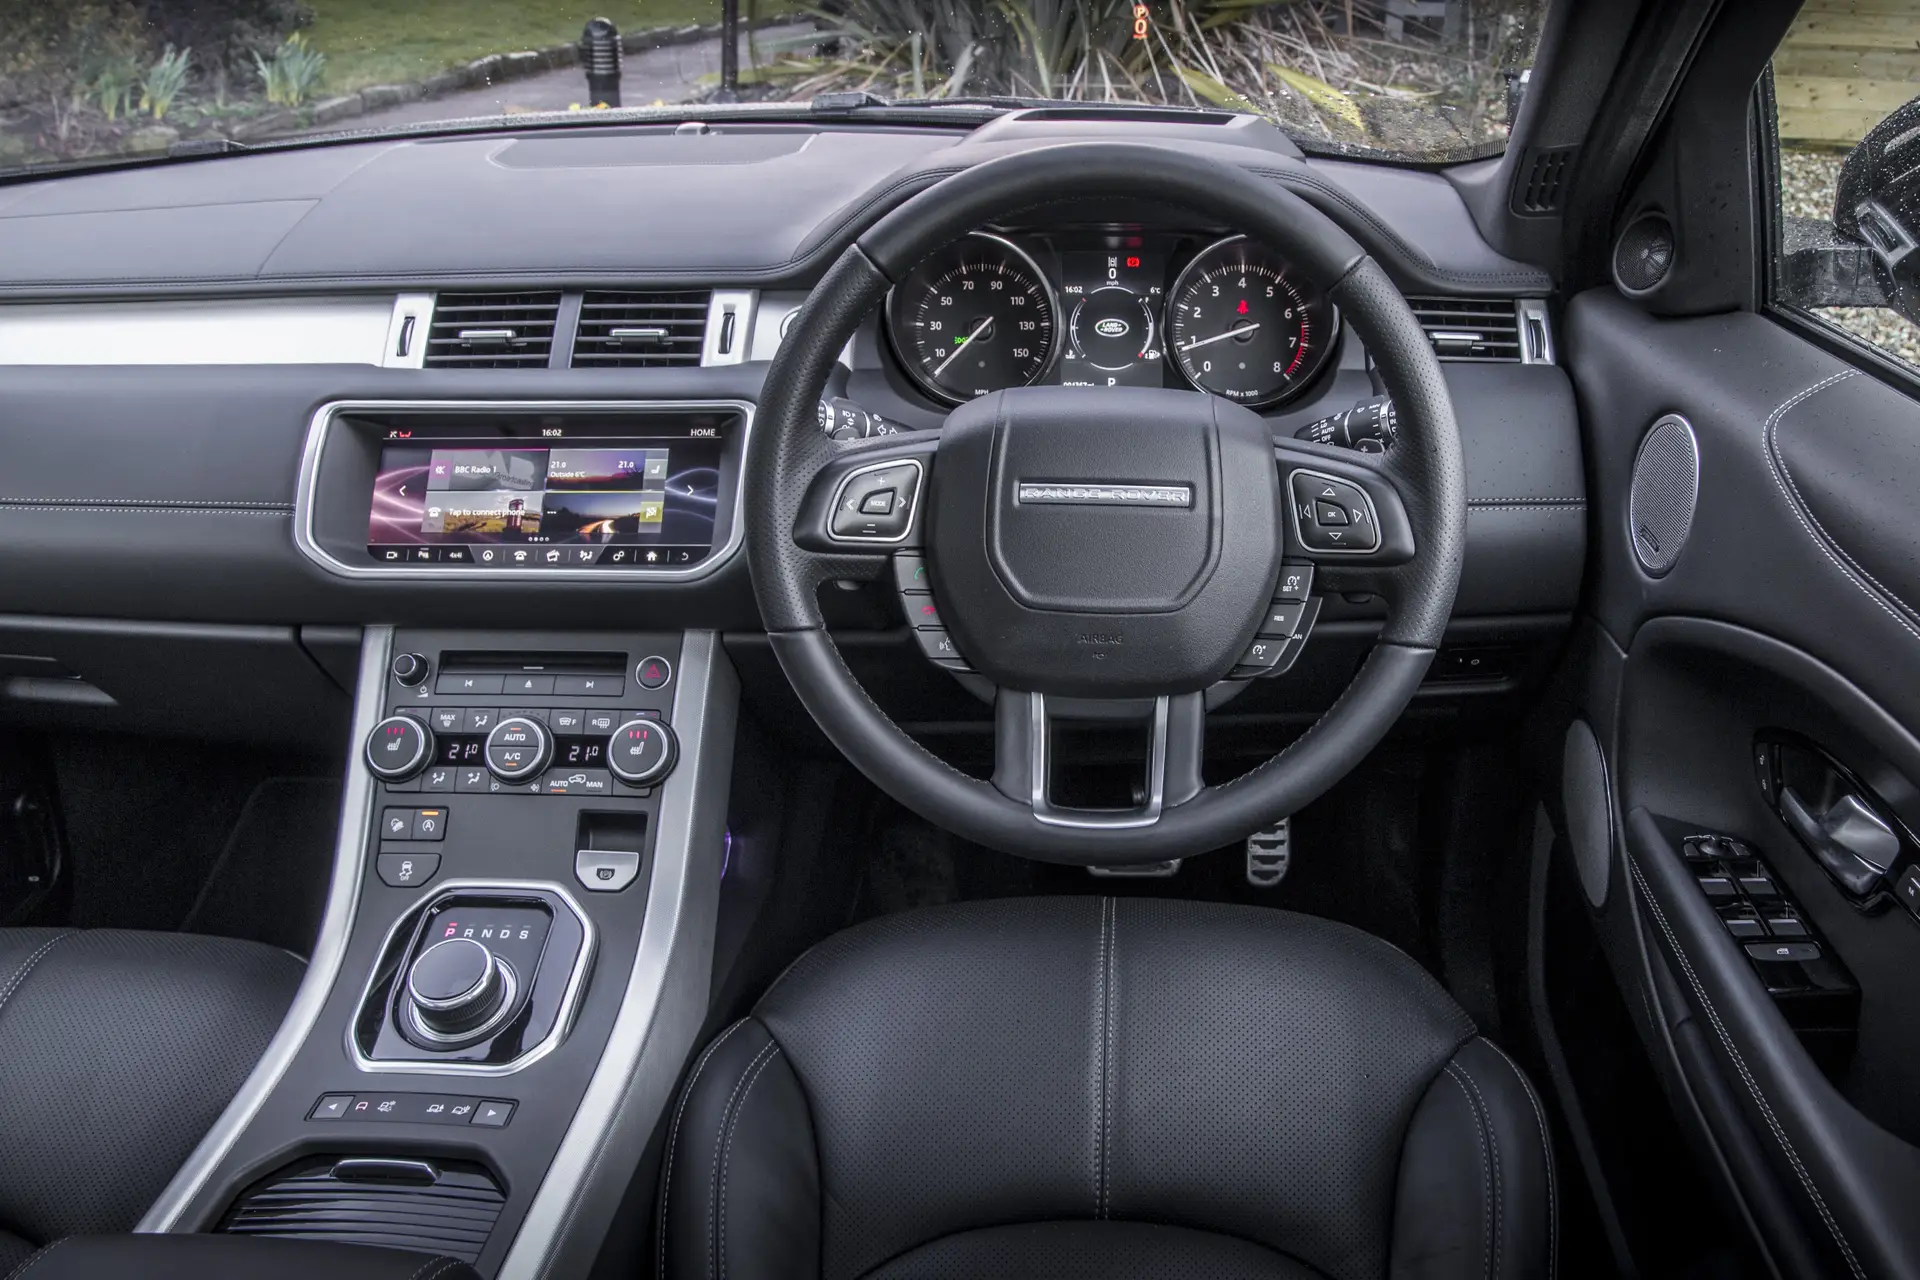 Range Rover Evoque (2011-2019) Review: interior close up photo of the Range Rover Evoque dashboard